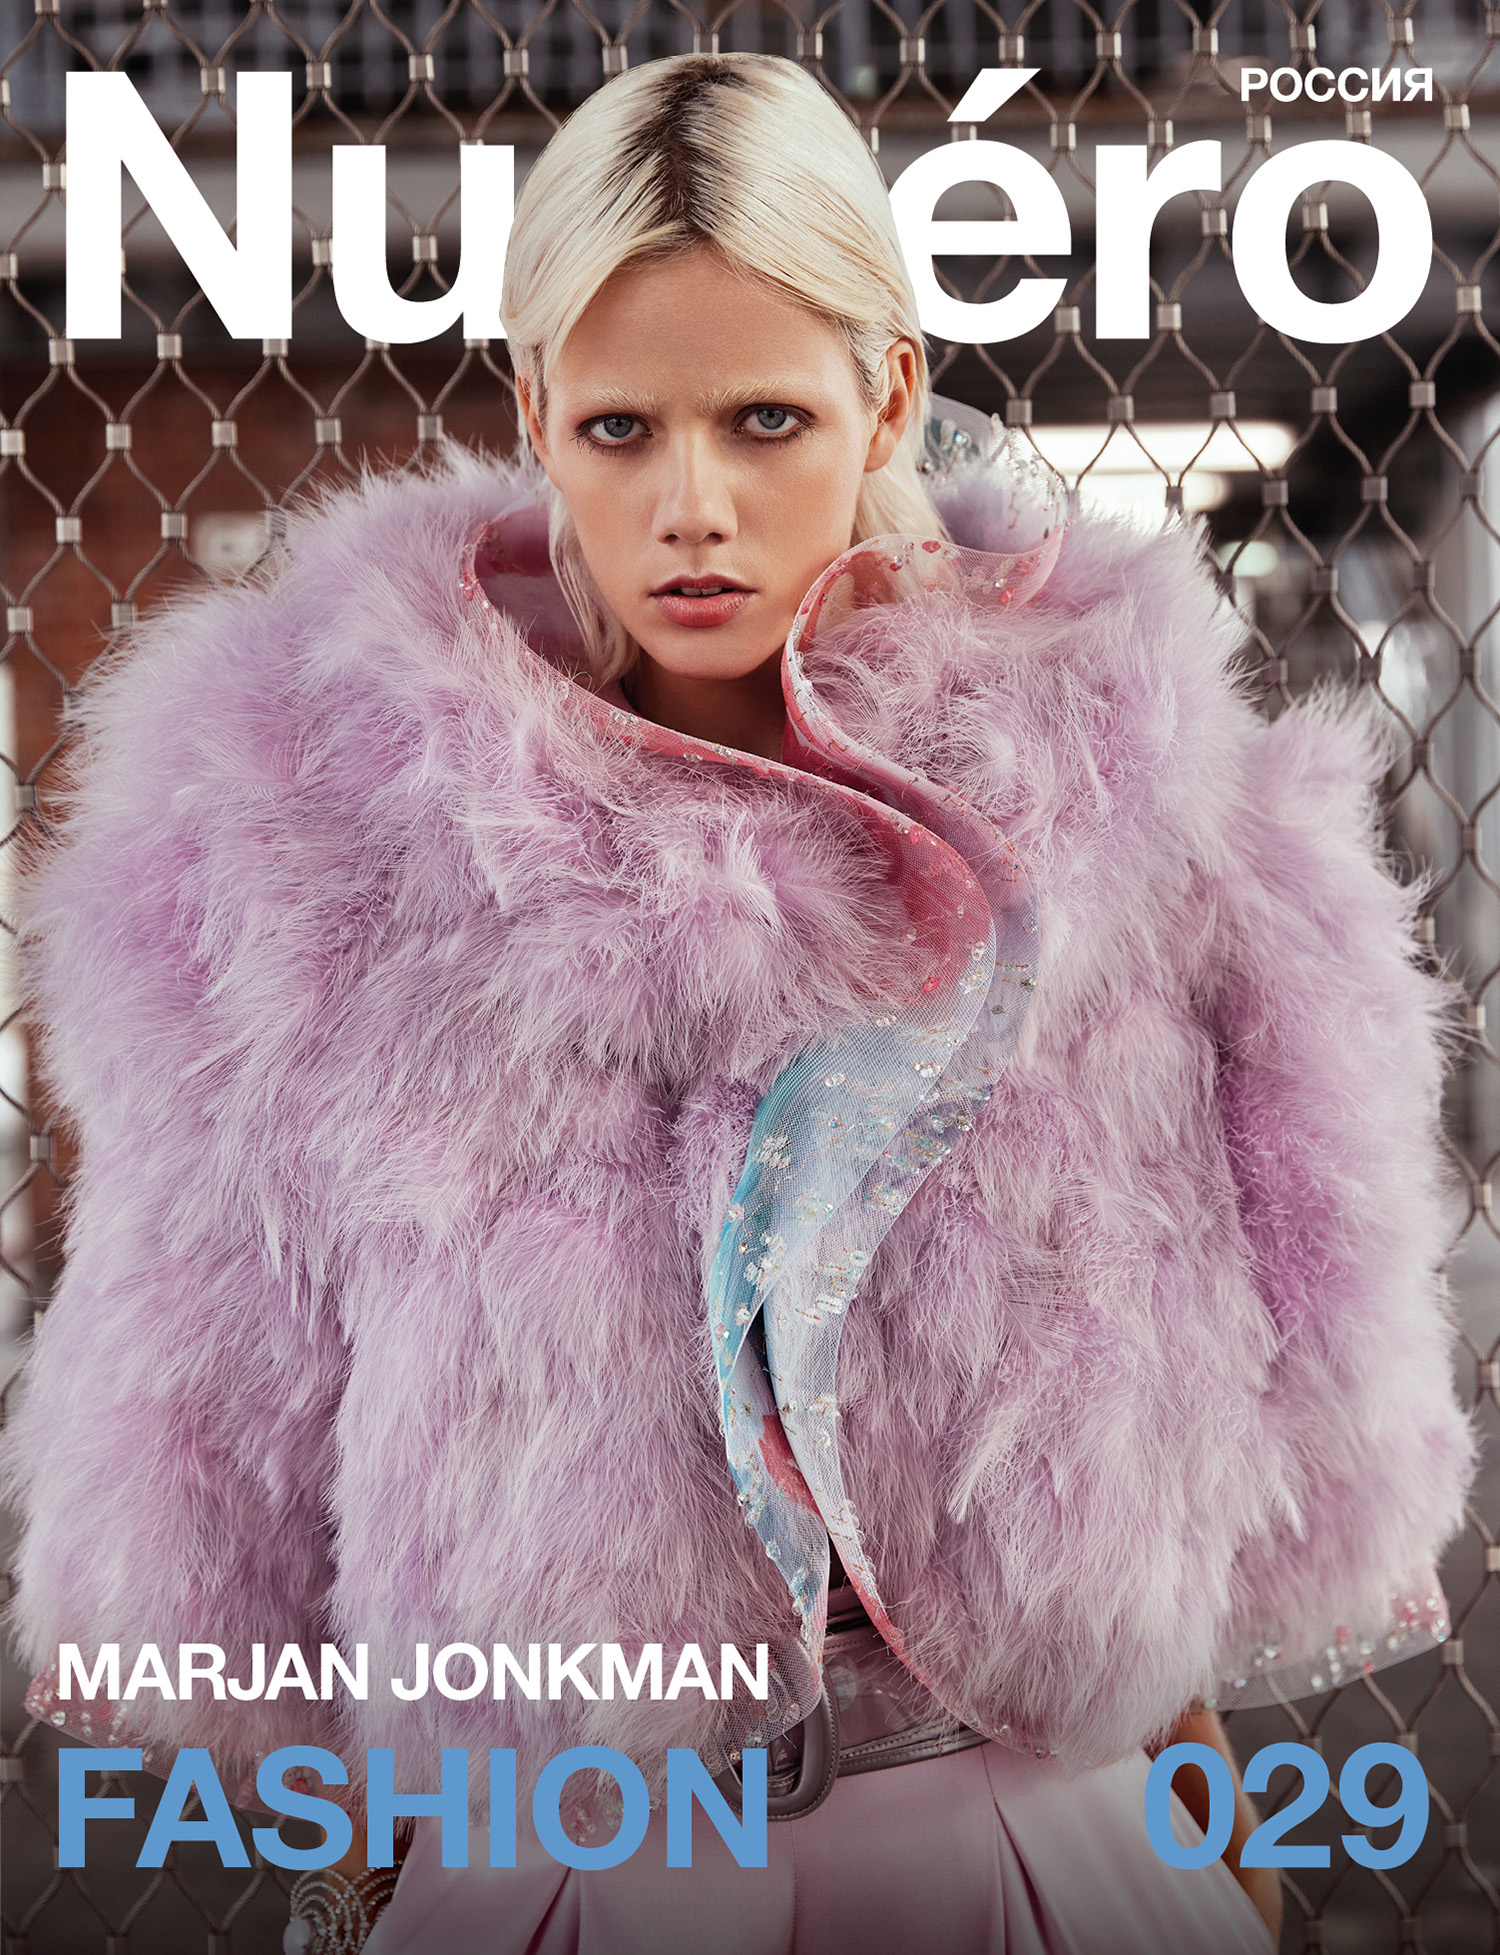 Marjan Jonkman covers Numéro Russia Issue 029 by Michele Roma